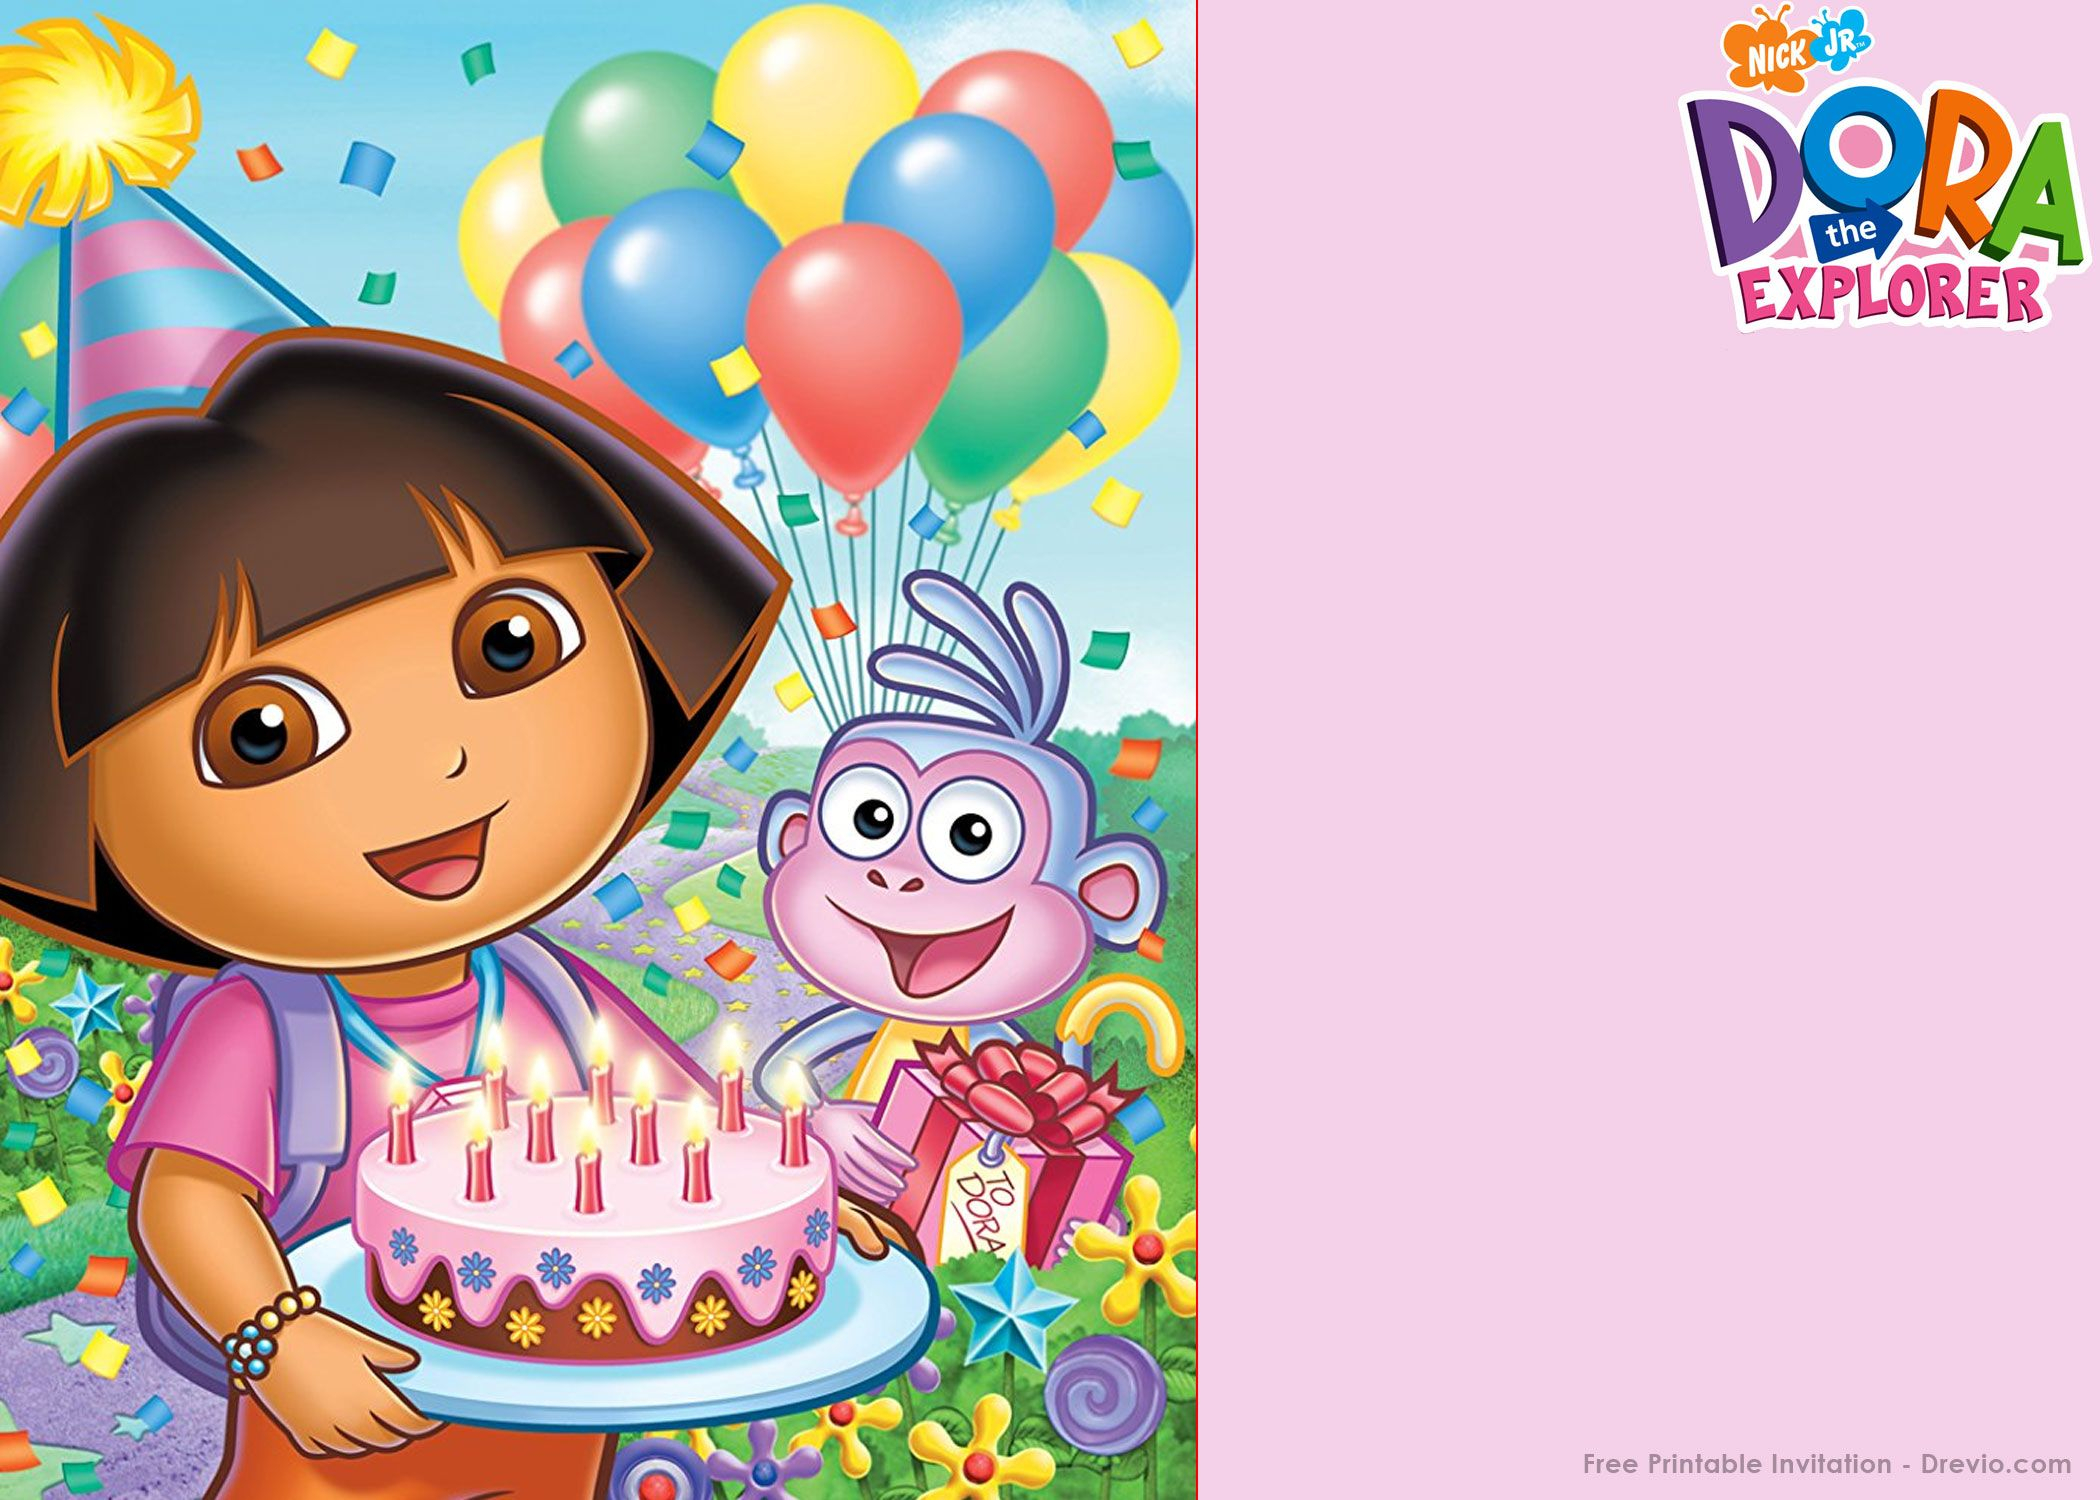 Free Printable Dora The Explorer Party Invitation Template inside dimensions 2100 X 1500